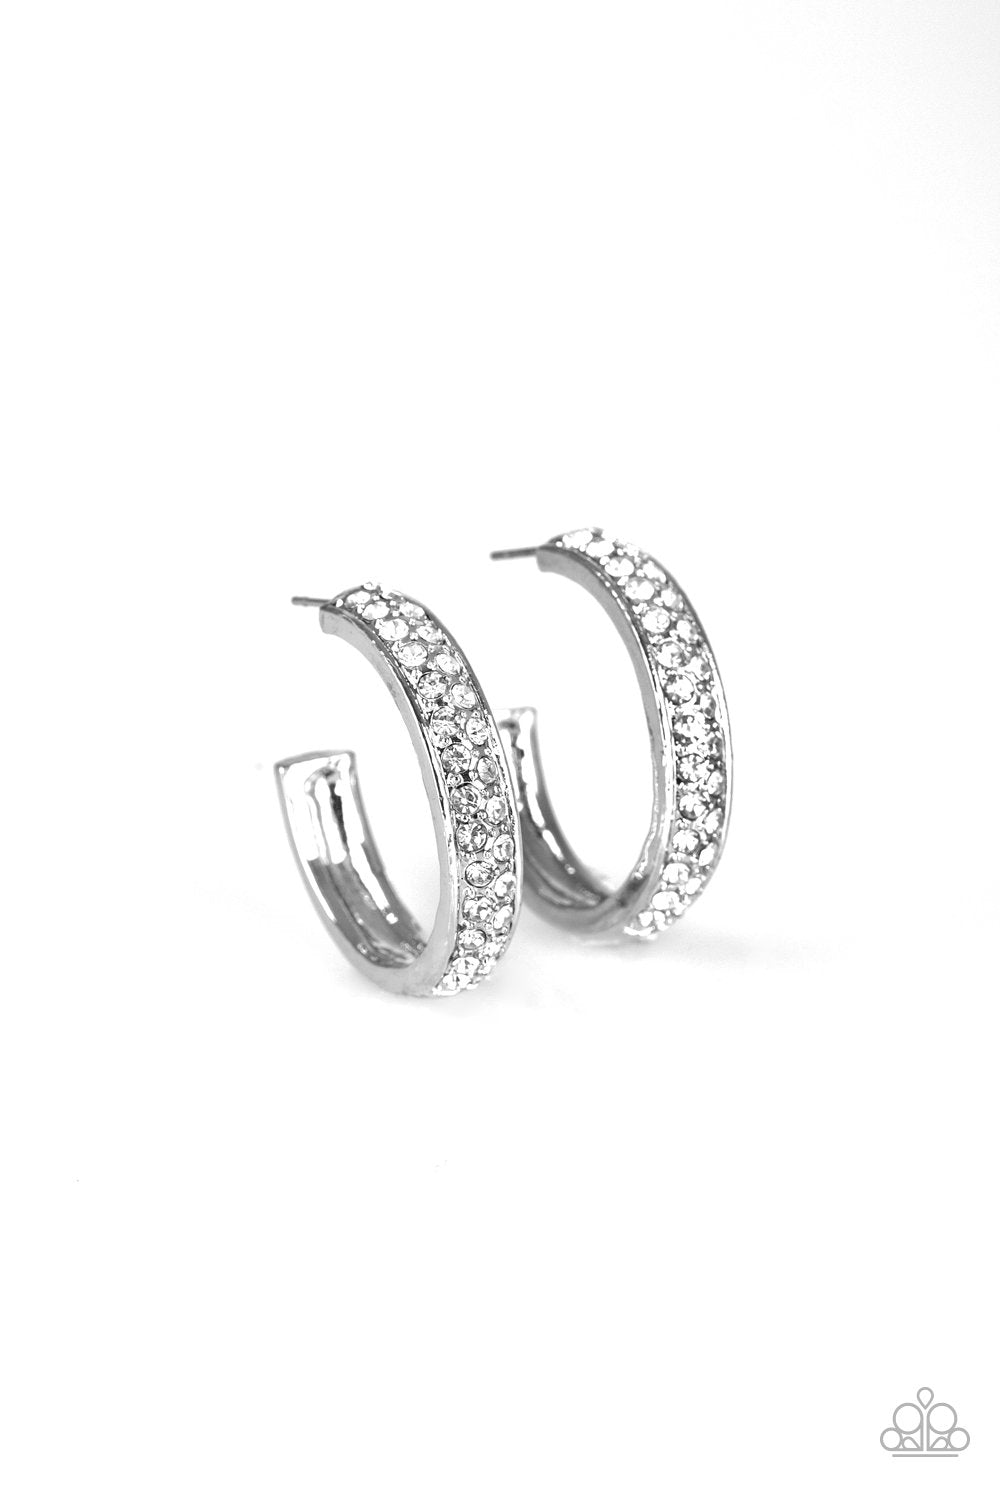 Cash Flow White Rhinestone Hoop Earrings - Paparazzi Accessories-CarasShop.com - $5 Jewelry by Cara Jewels